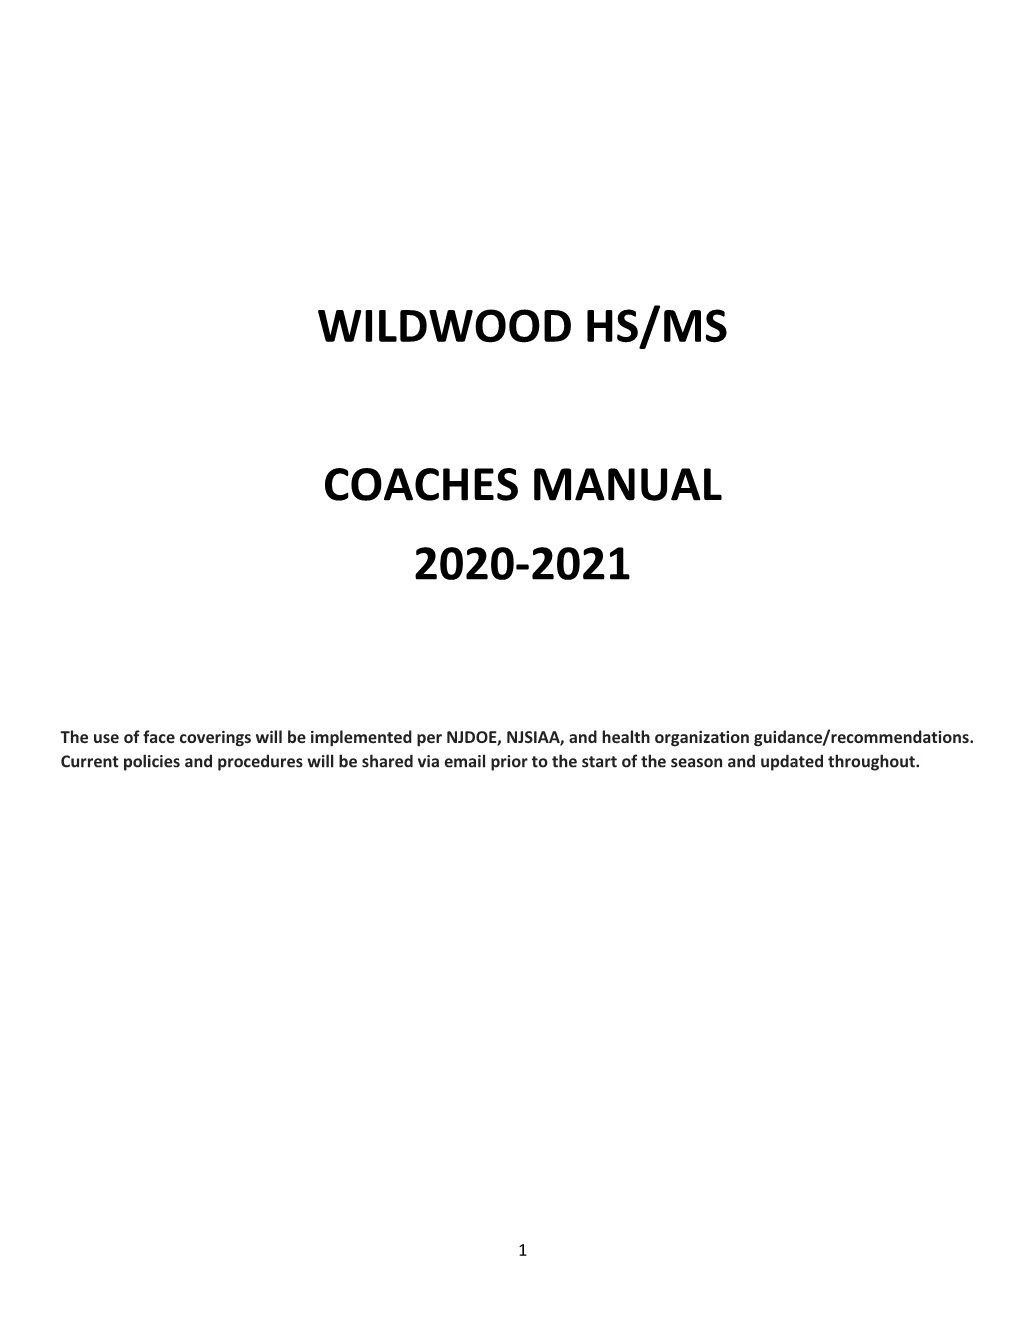 Coaches Manual 2020-2021